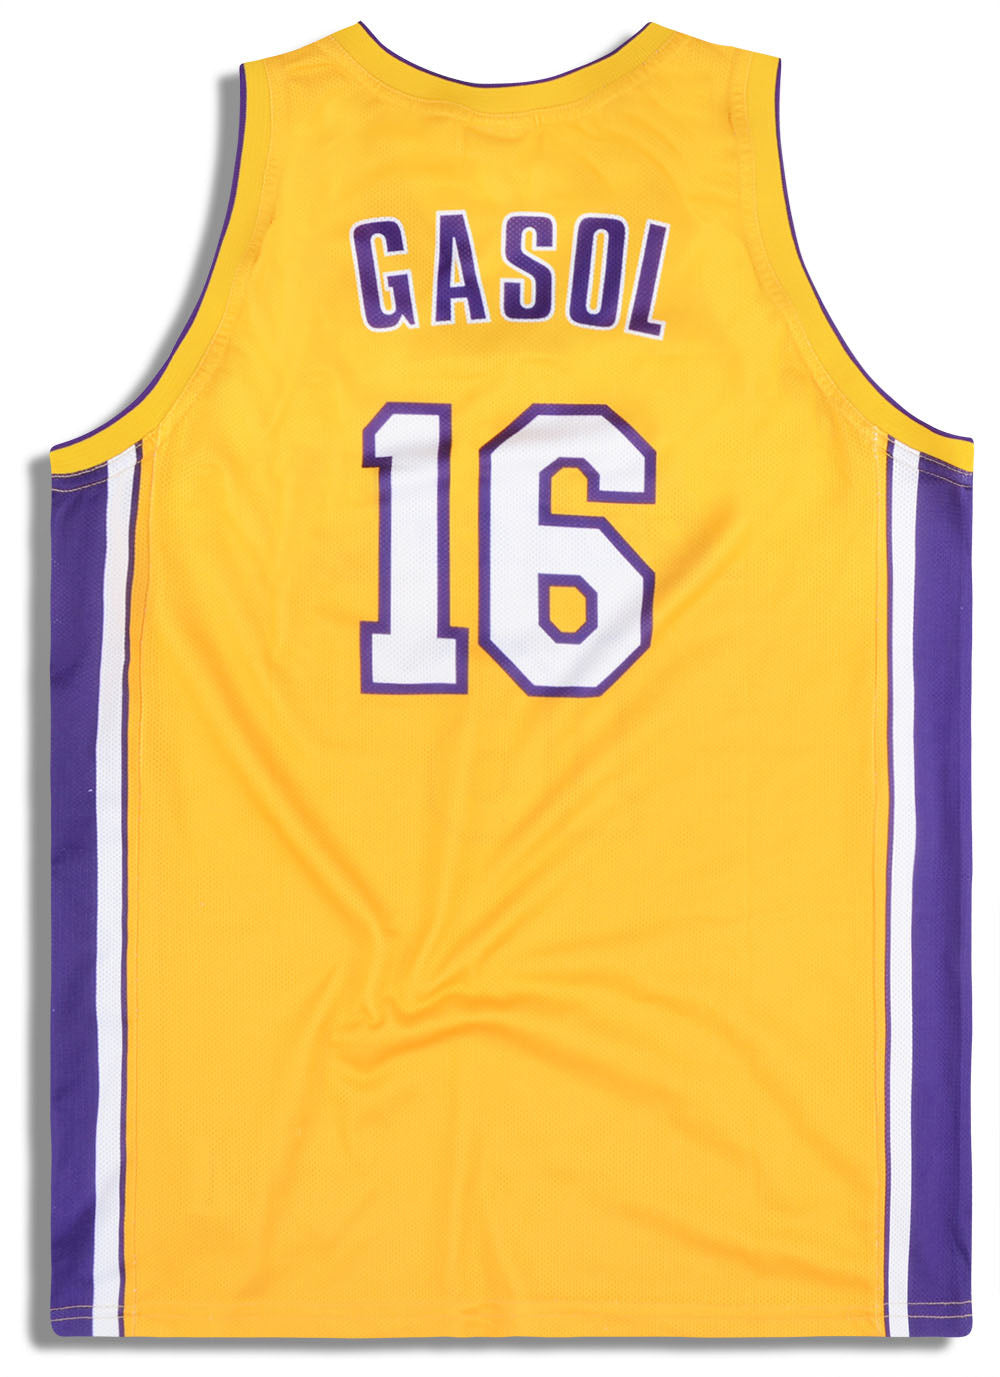 LA Lakers retire IOC member Gasol's number 16 jersey